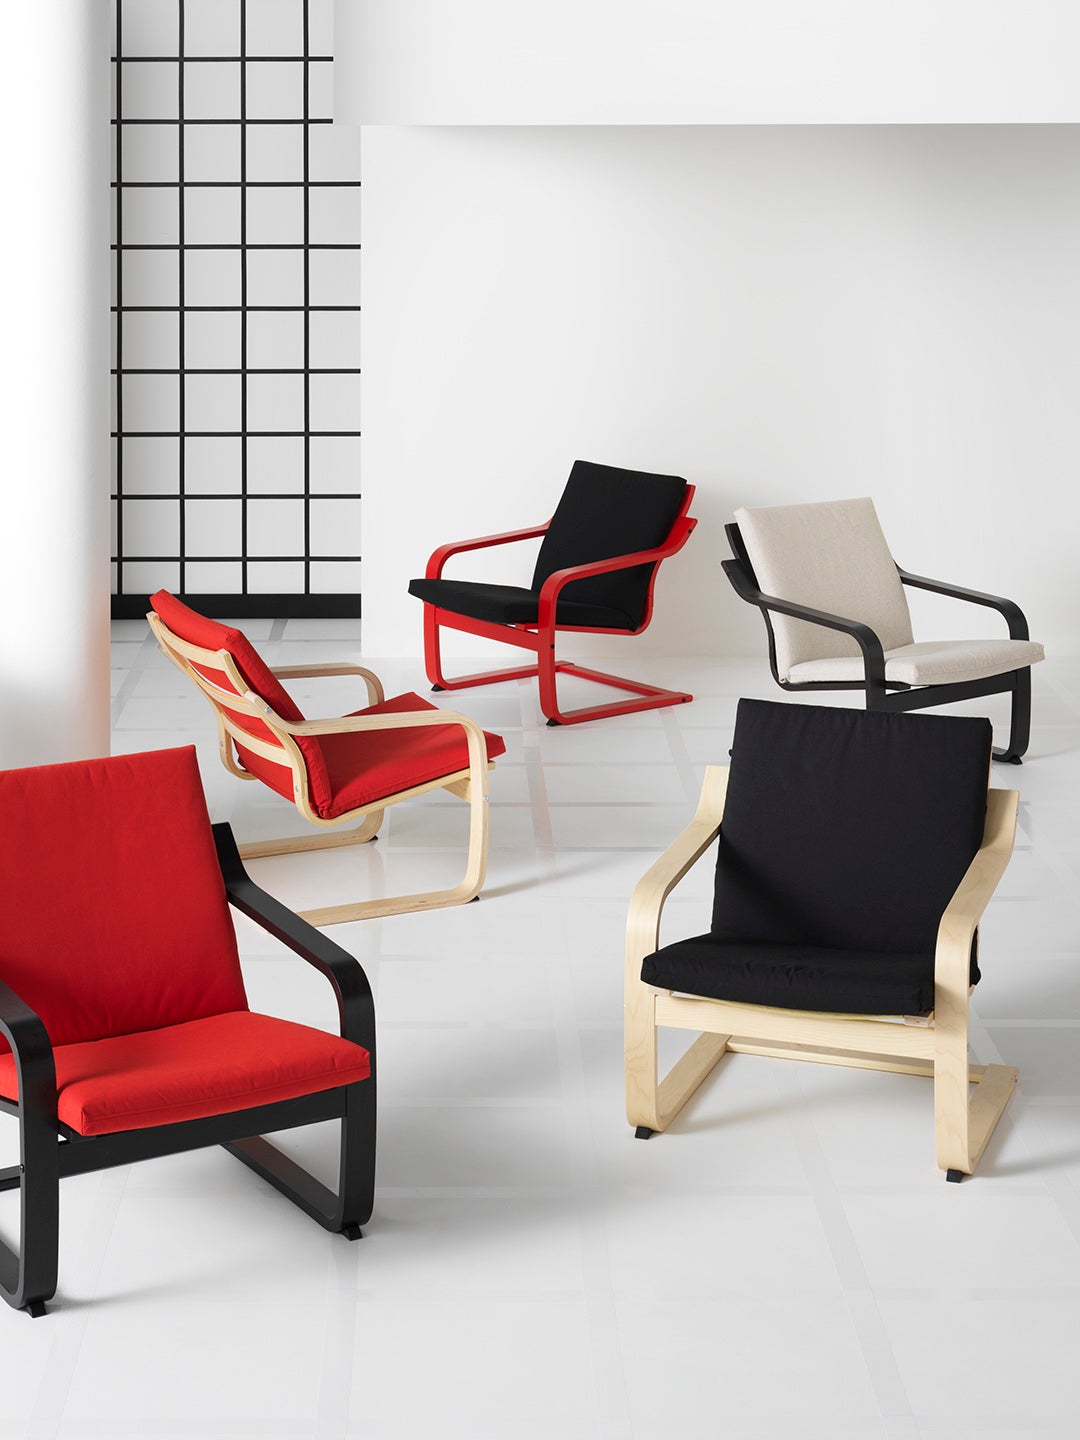 IKEA Poang chair in multiple colorways